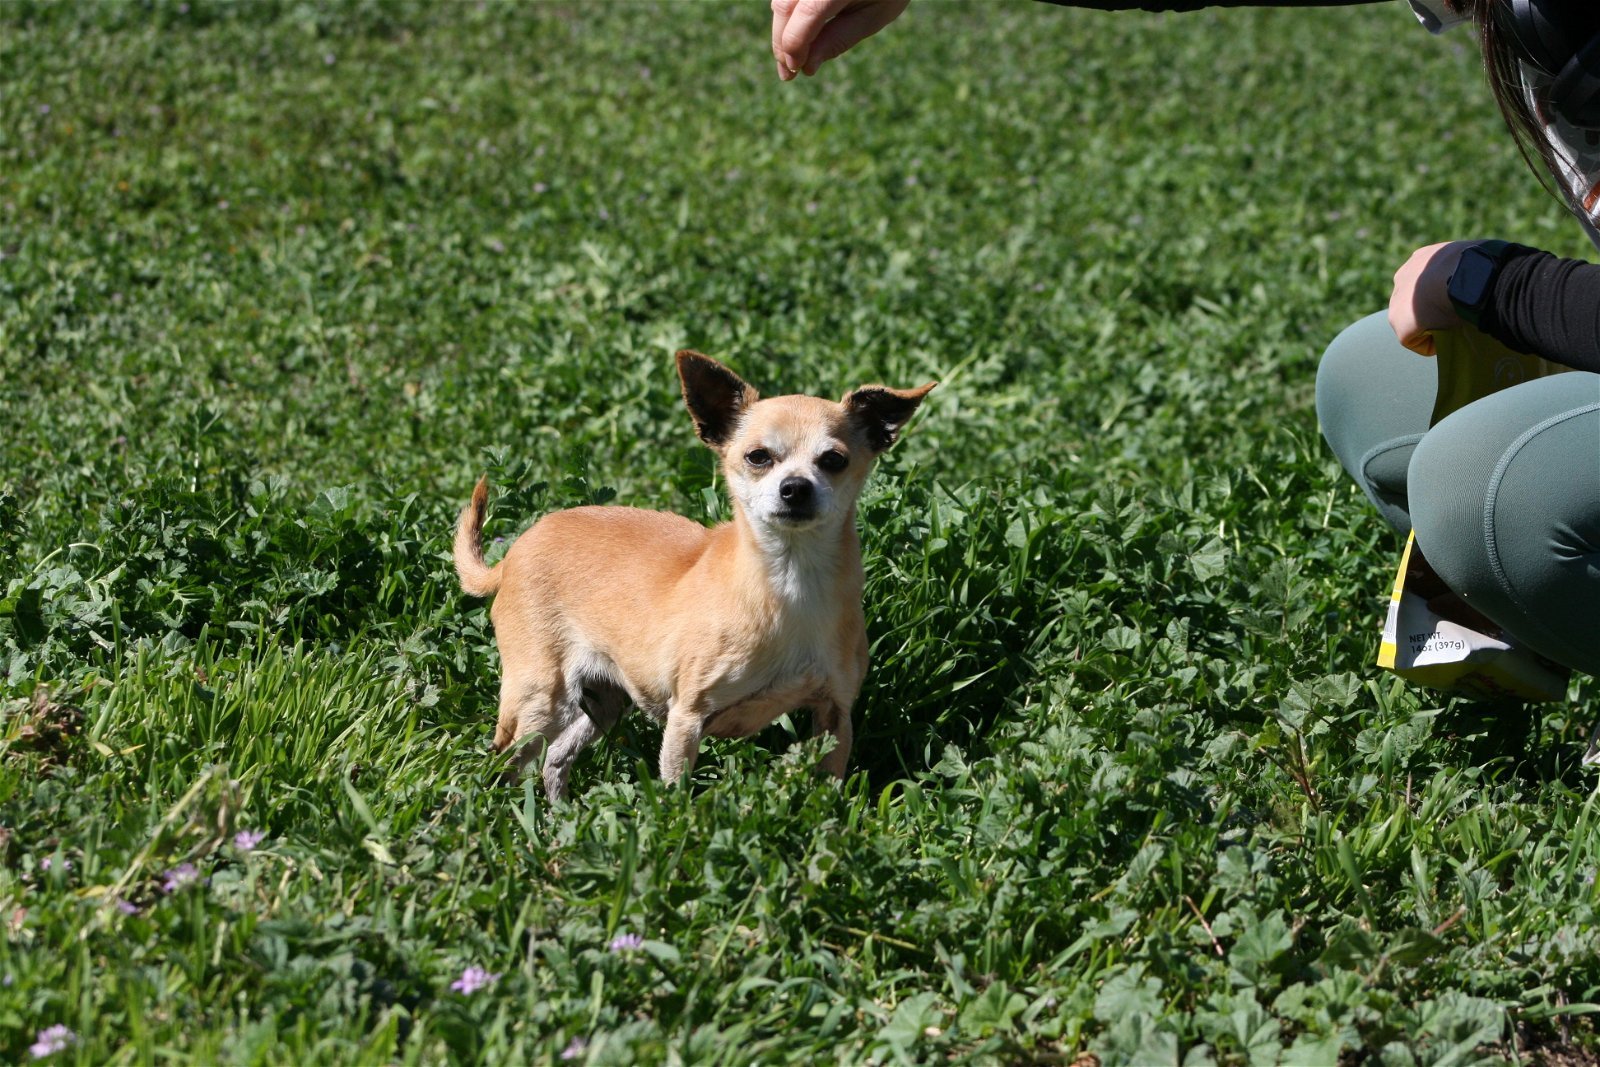 Baby, an adoptable Chihuahua in Ramona, CA, 92065 | Photo Image 3